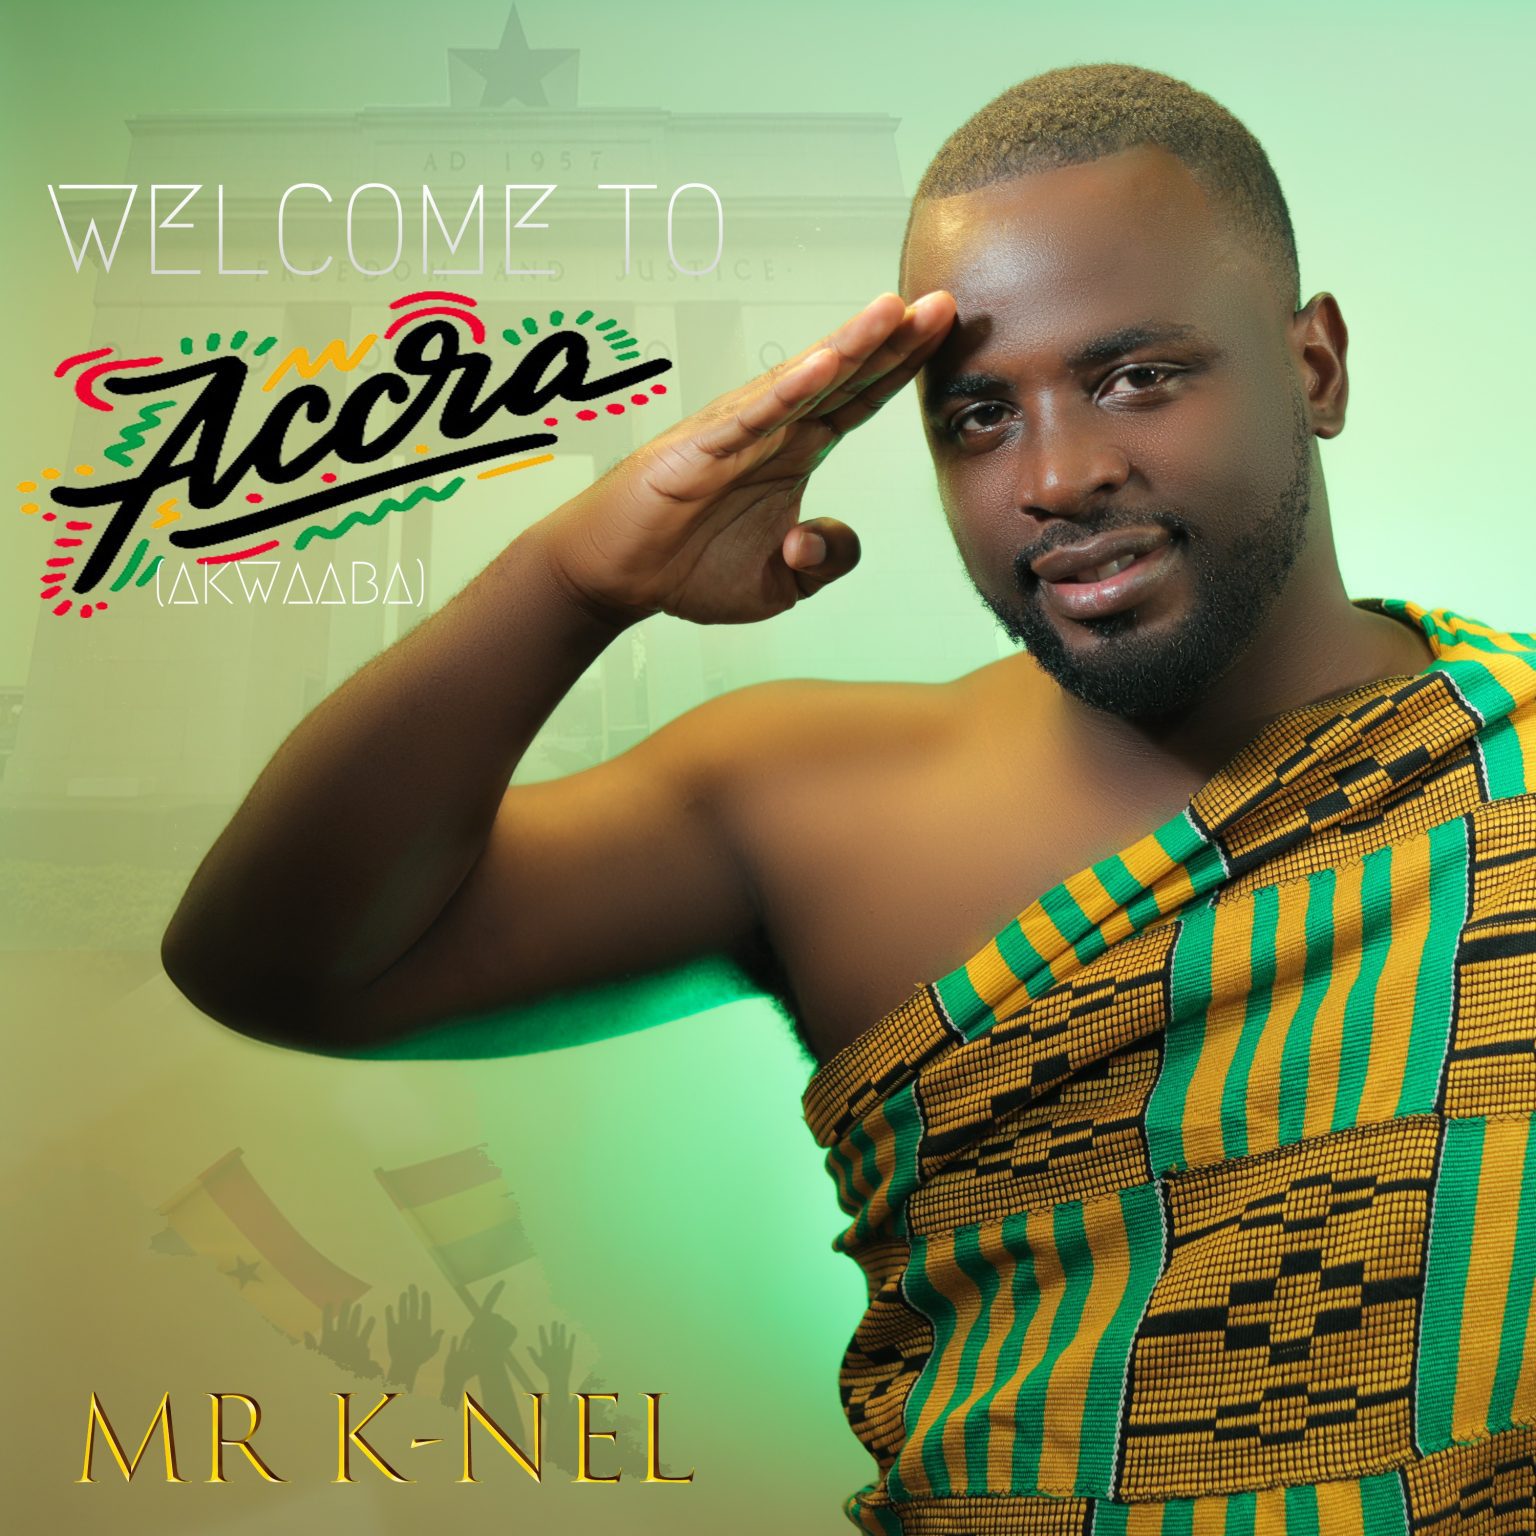 Mr K-nel - Welcome to Accra (Akwaaba)